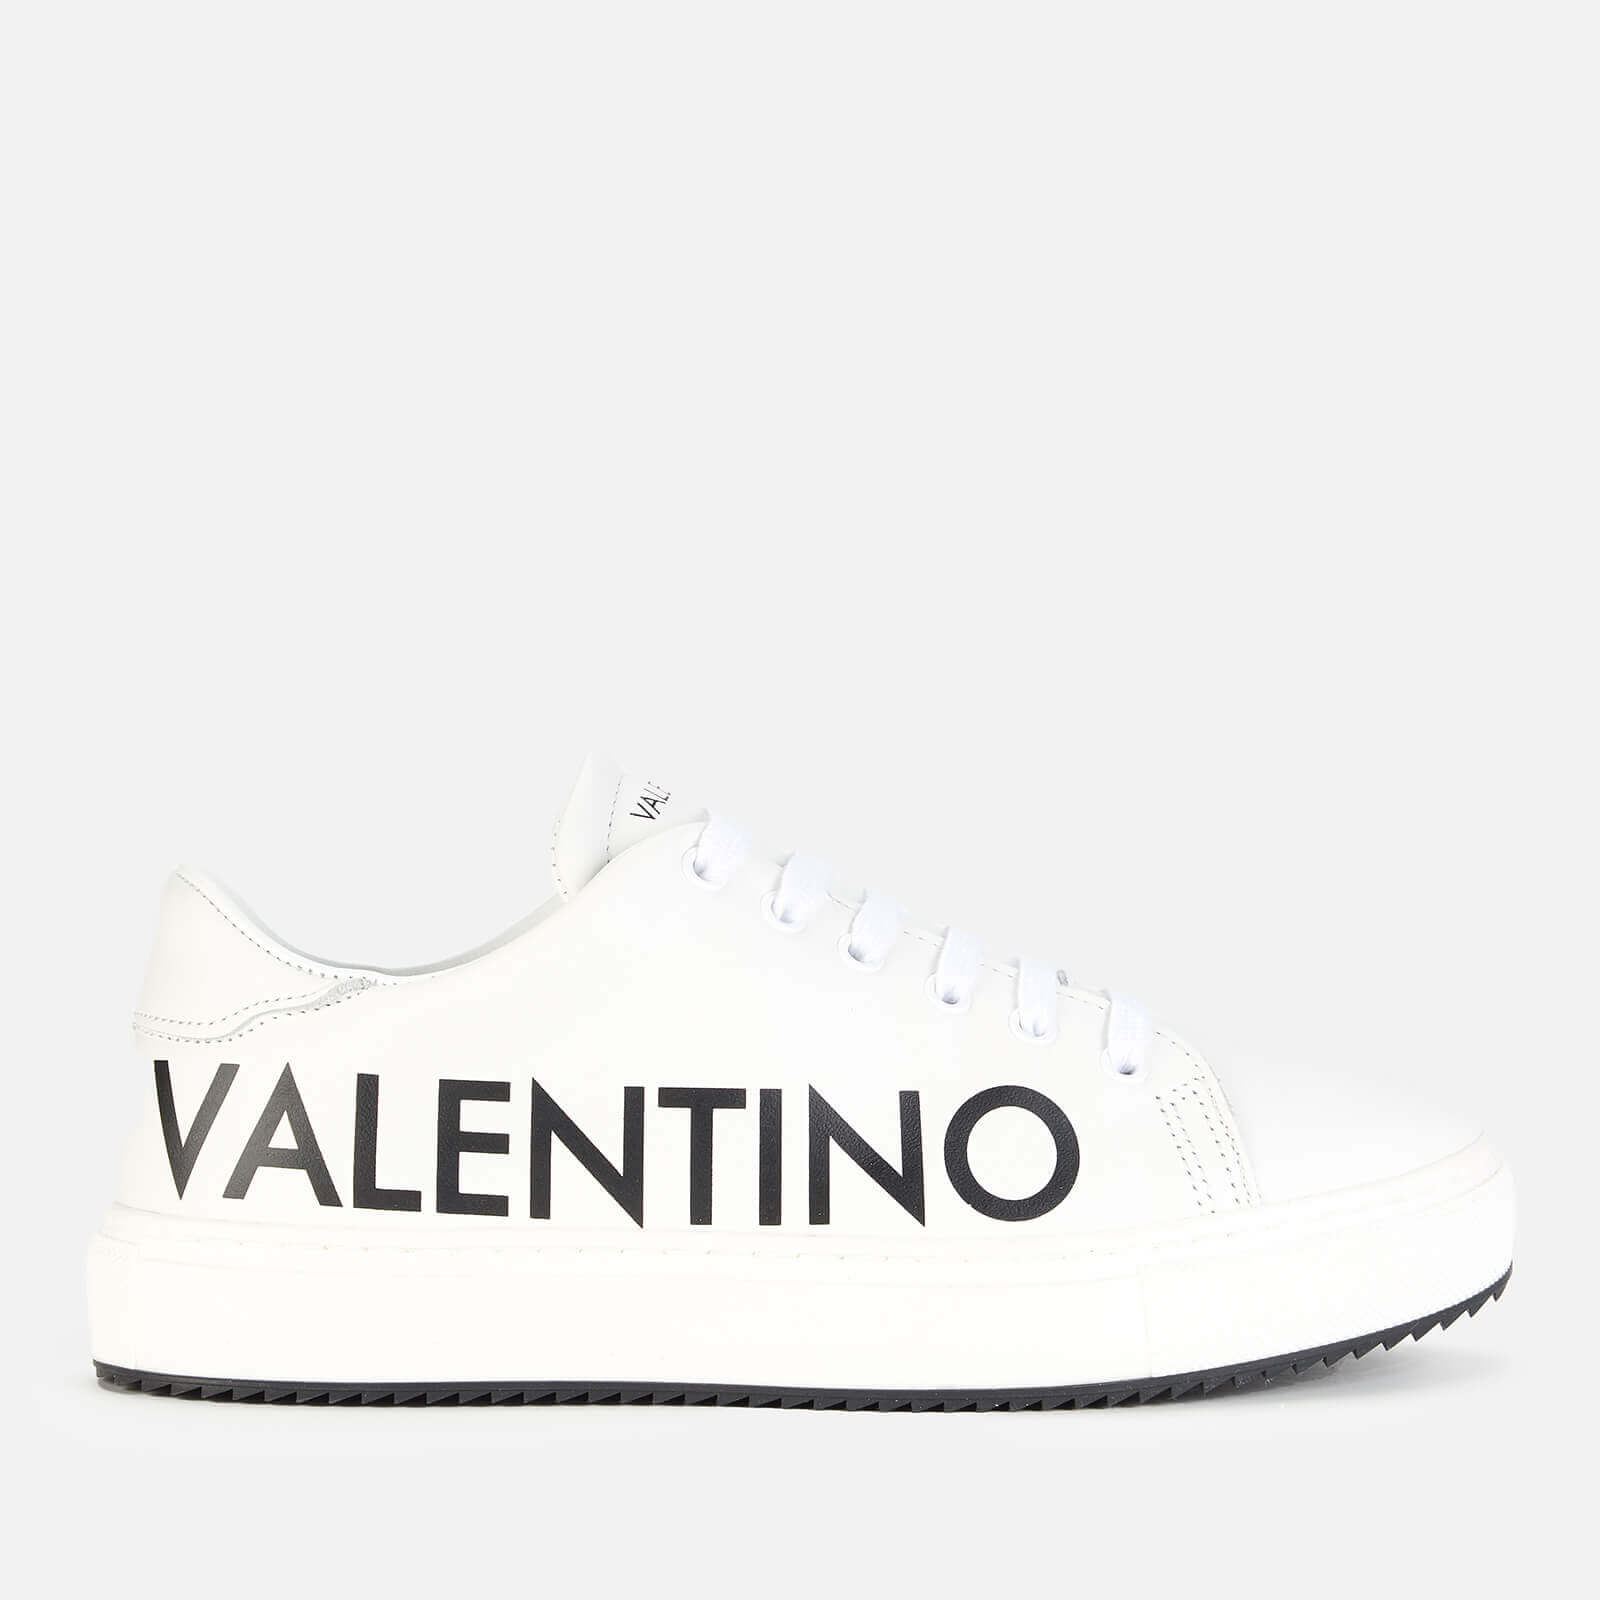 Valentino Men's Leather Cupsole Trainers - White/Black - Uk 8